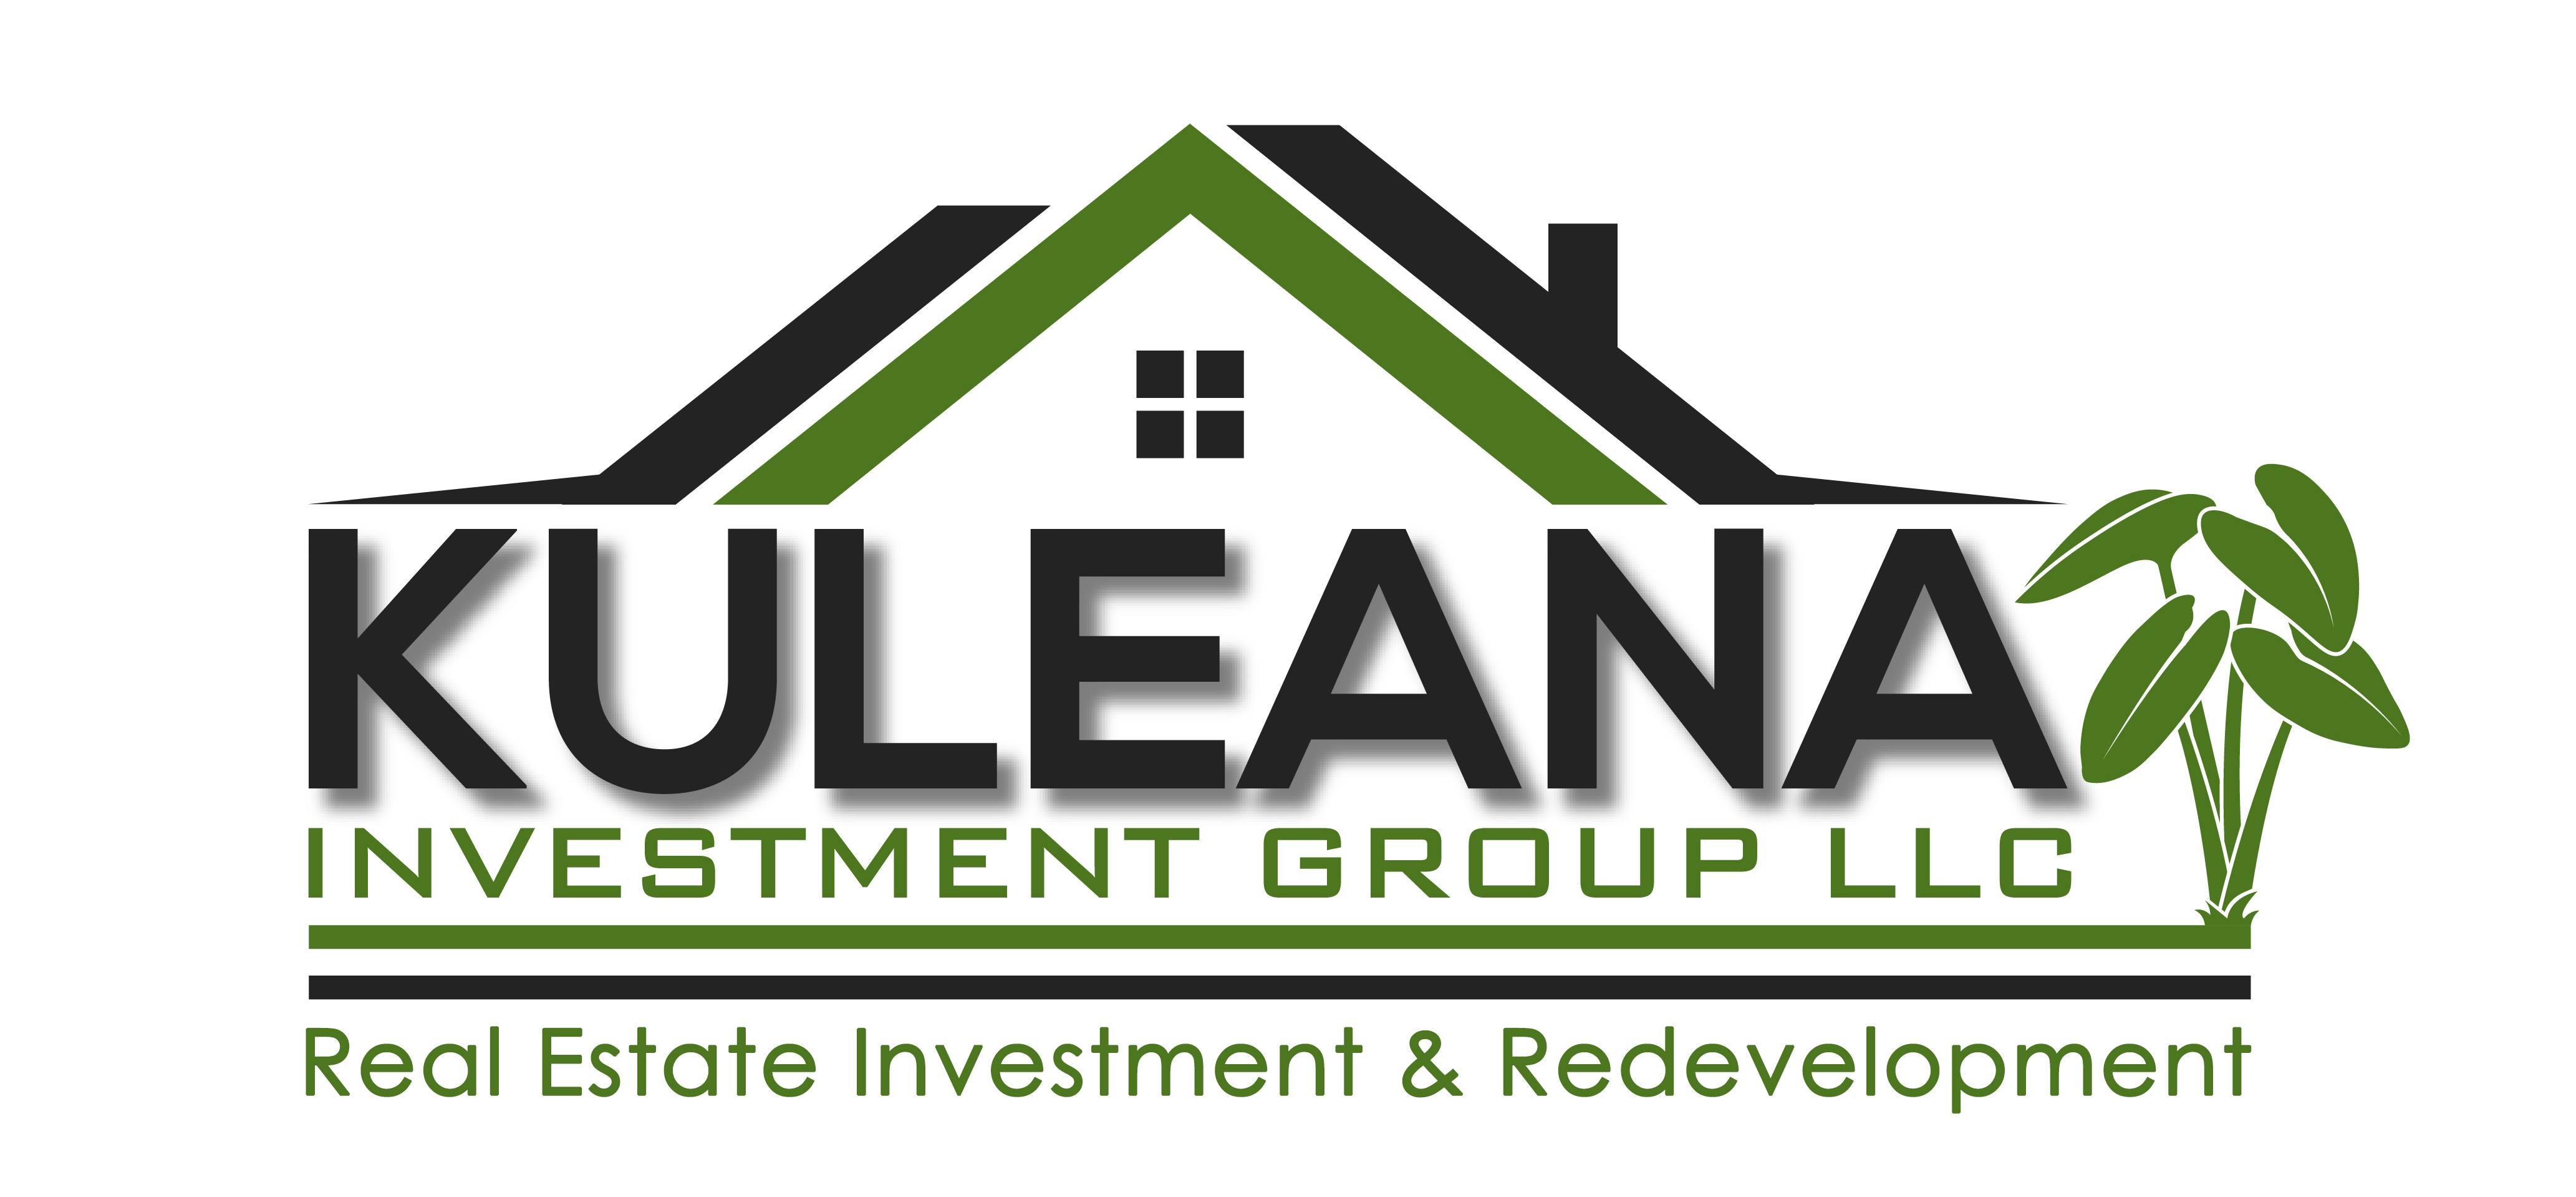 Kuleana Investment Group, LLC